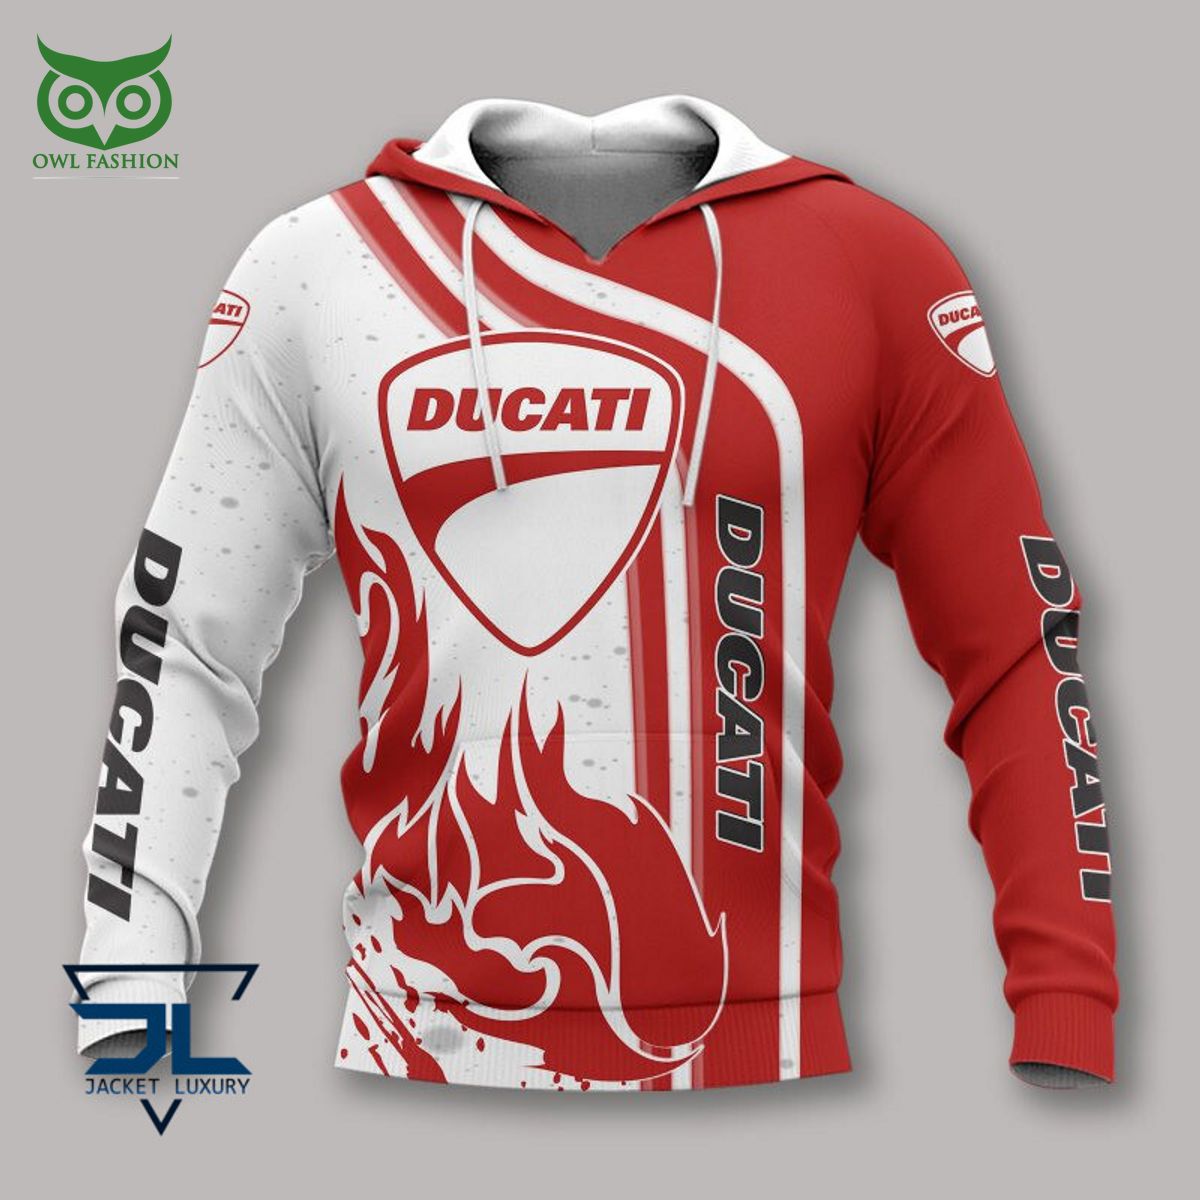 Ducati Car Motor Brand 3D Polo Hoodie Tshirt You look lazy